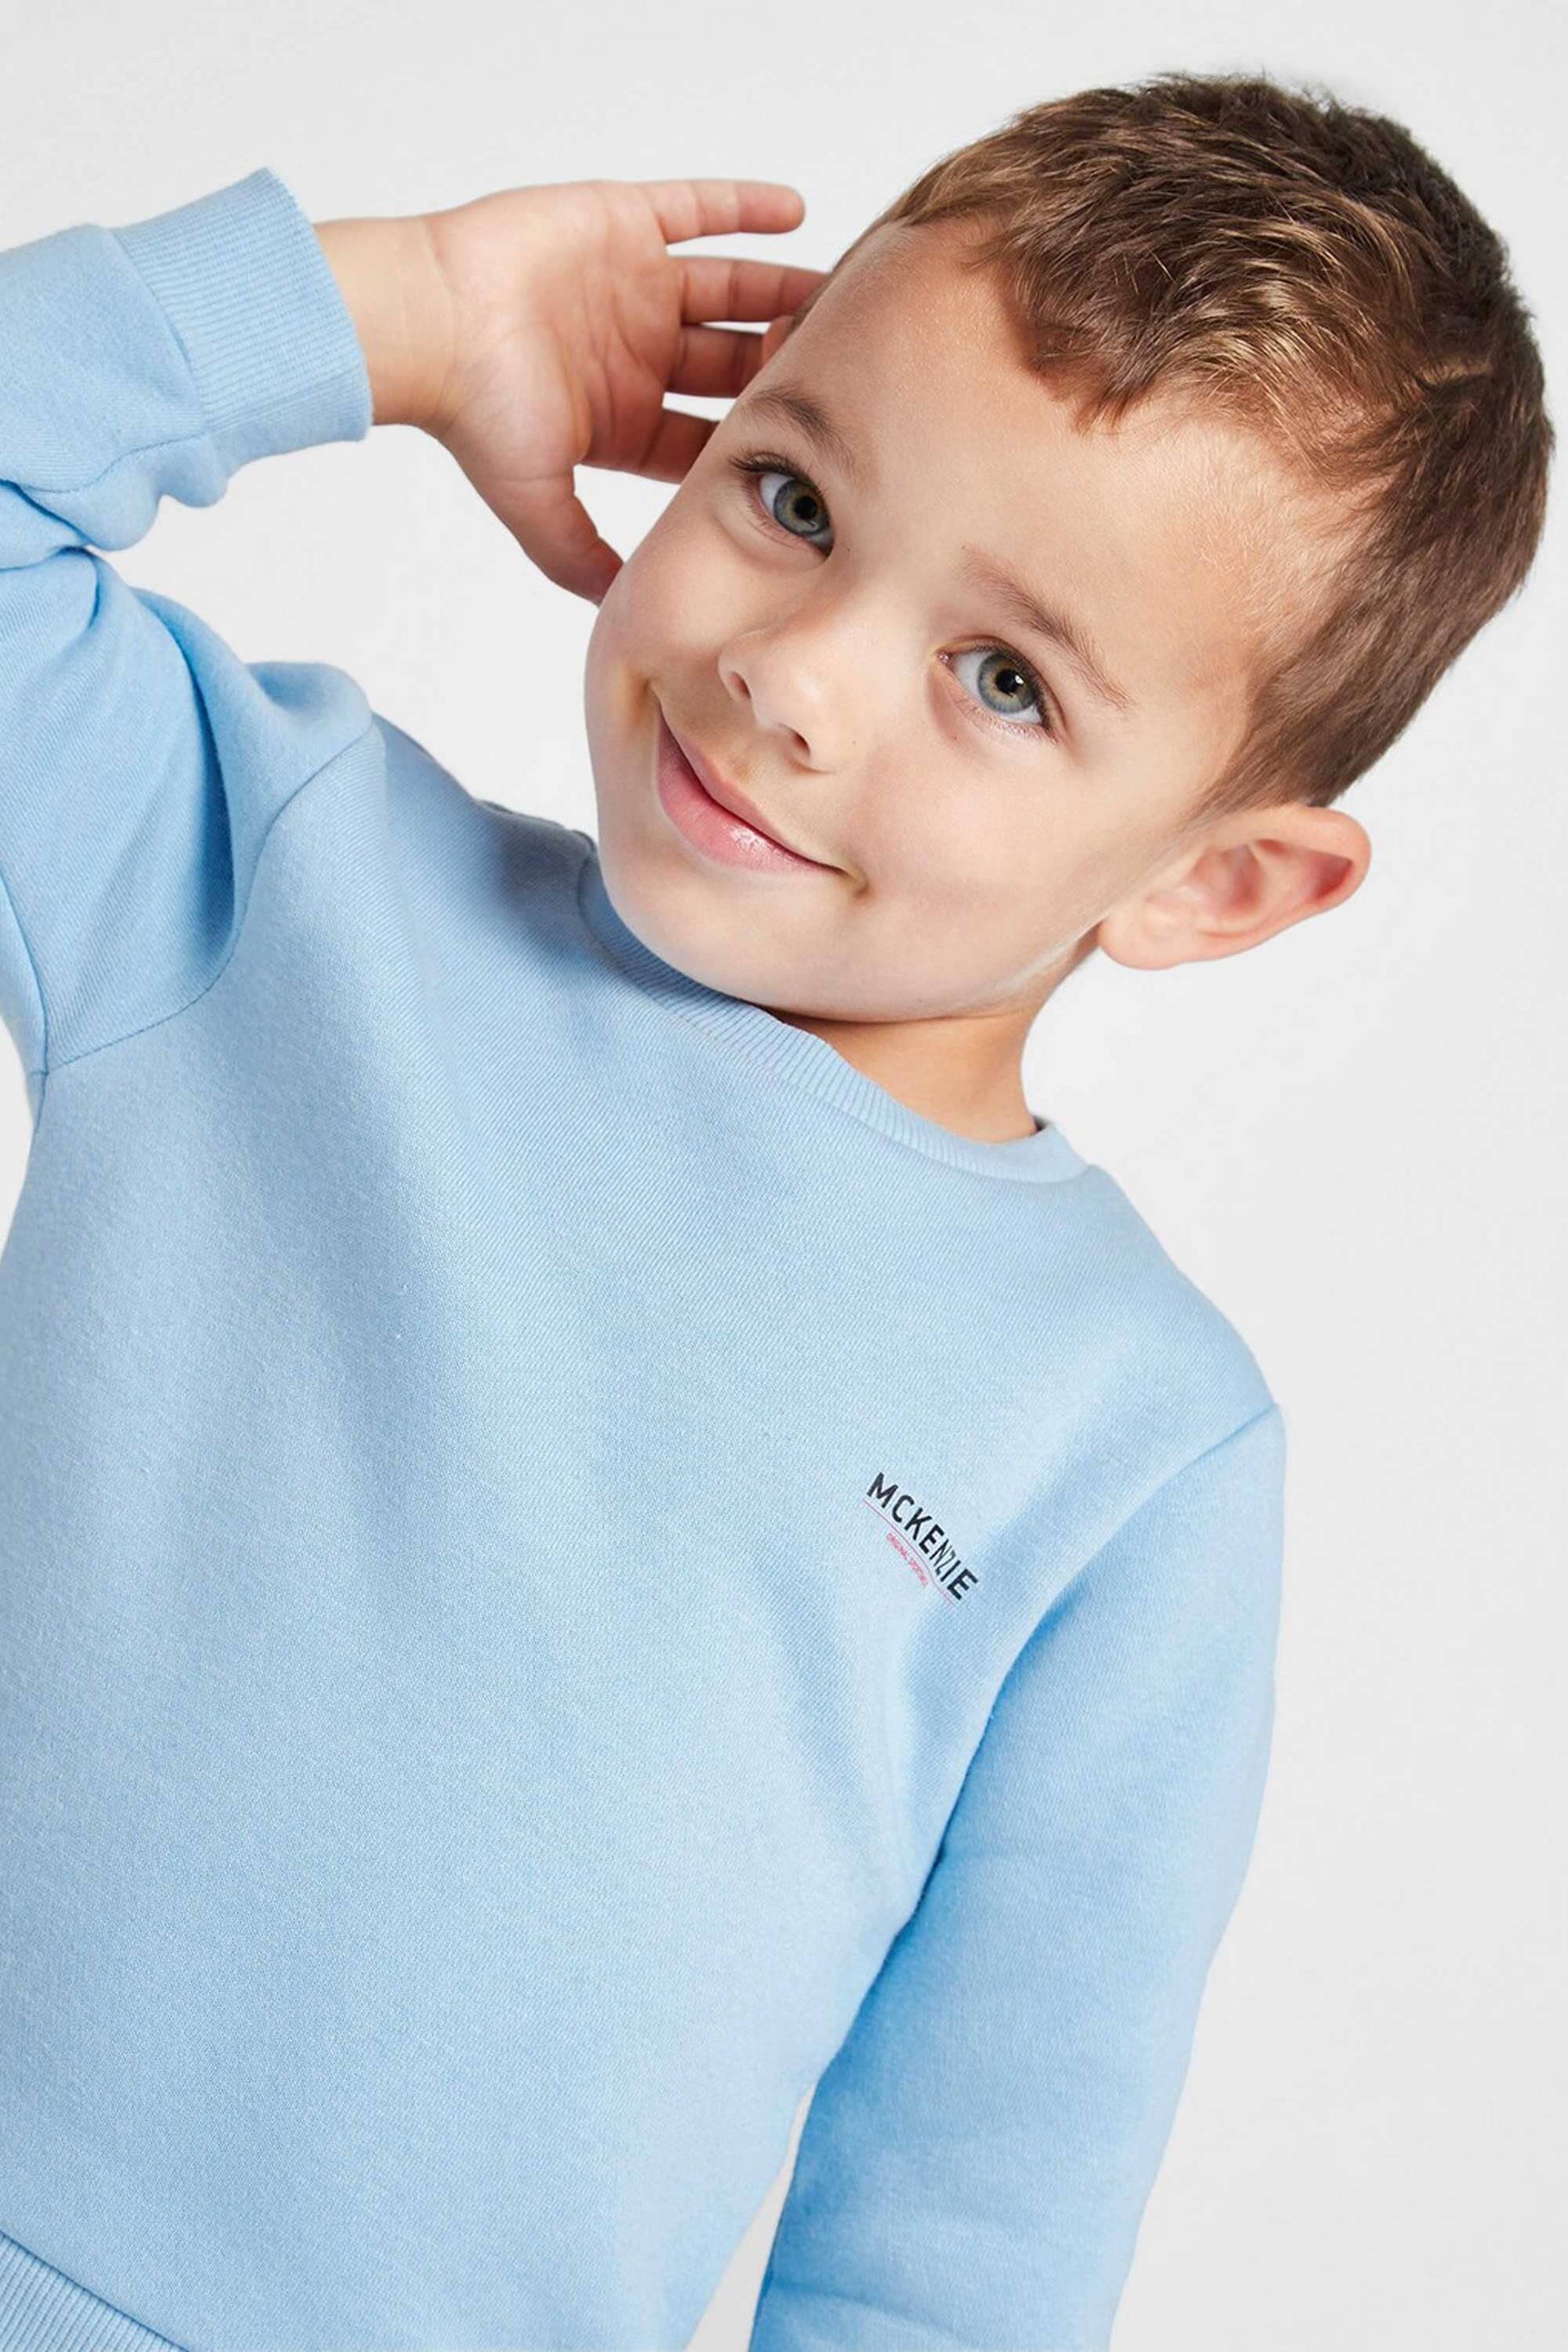 Mckenzie Kid's Logo Printed Design Fleece Tracksuit Kid's tracksuit First Choice 